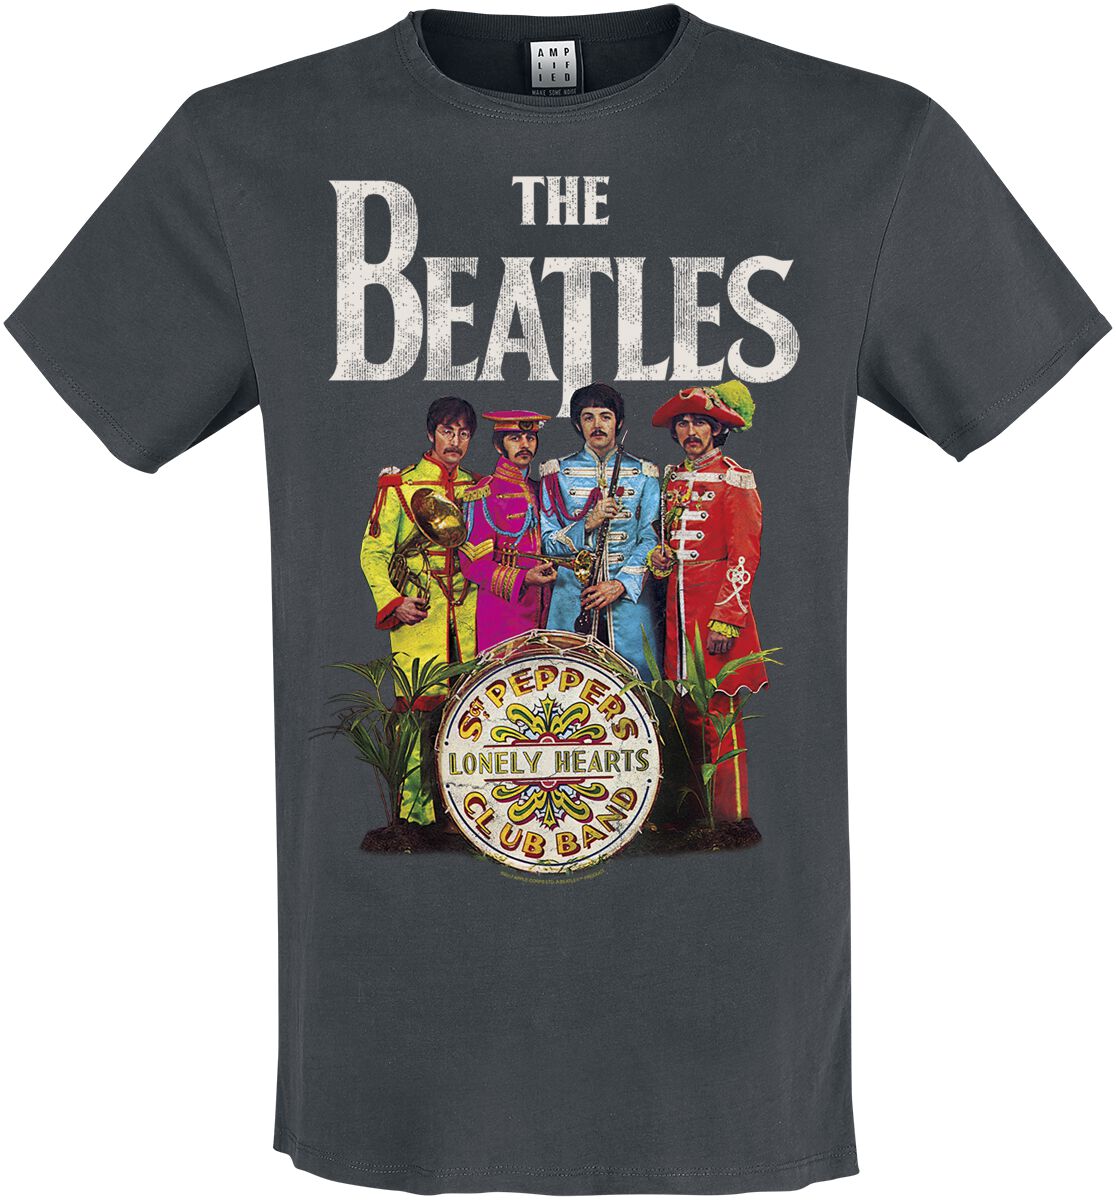 The Beatles T-Shirt - Amplified Collection - Lonely Hearts - M bis XXL - für Männer - Größe XL - charcoal  - Lizenziertes Merchandise!